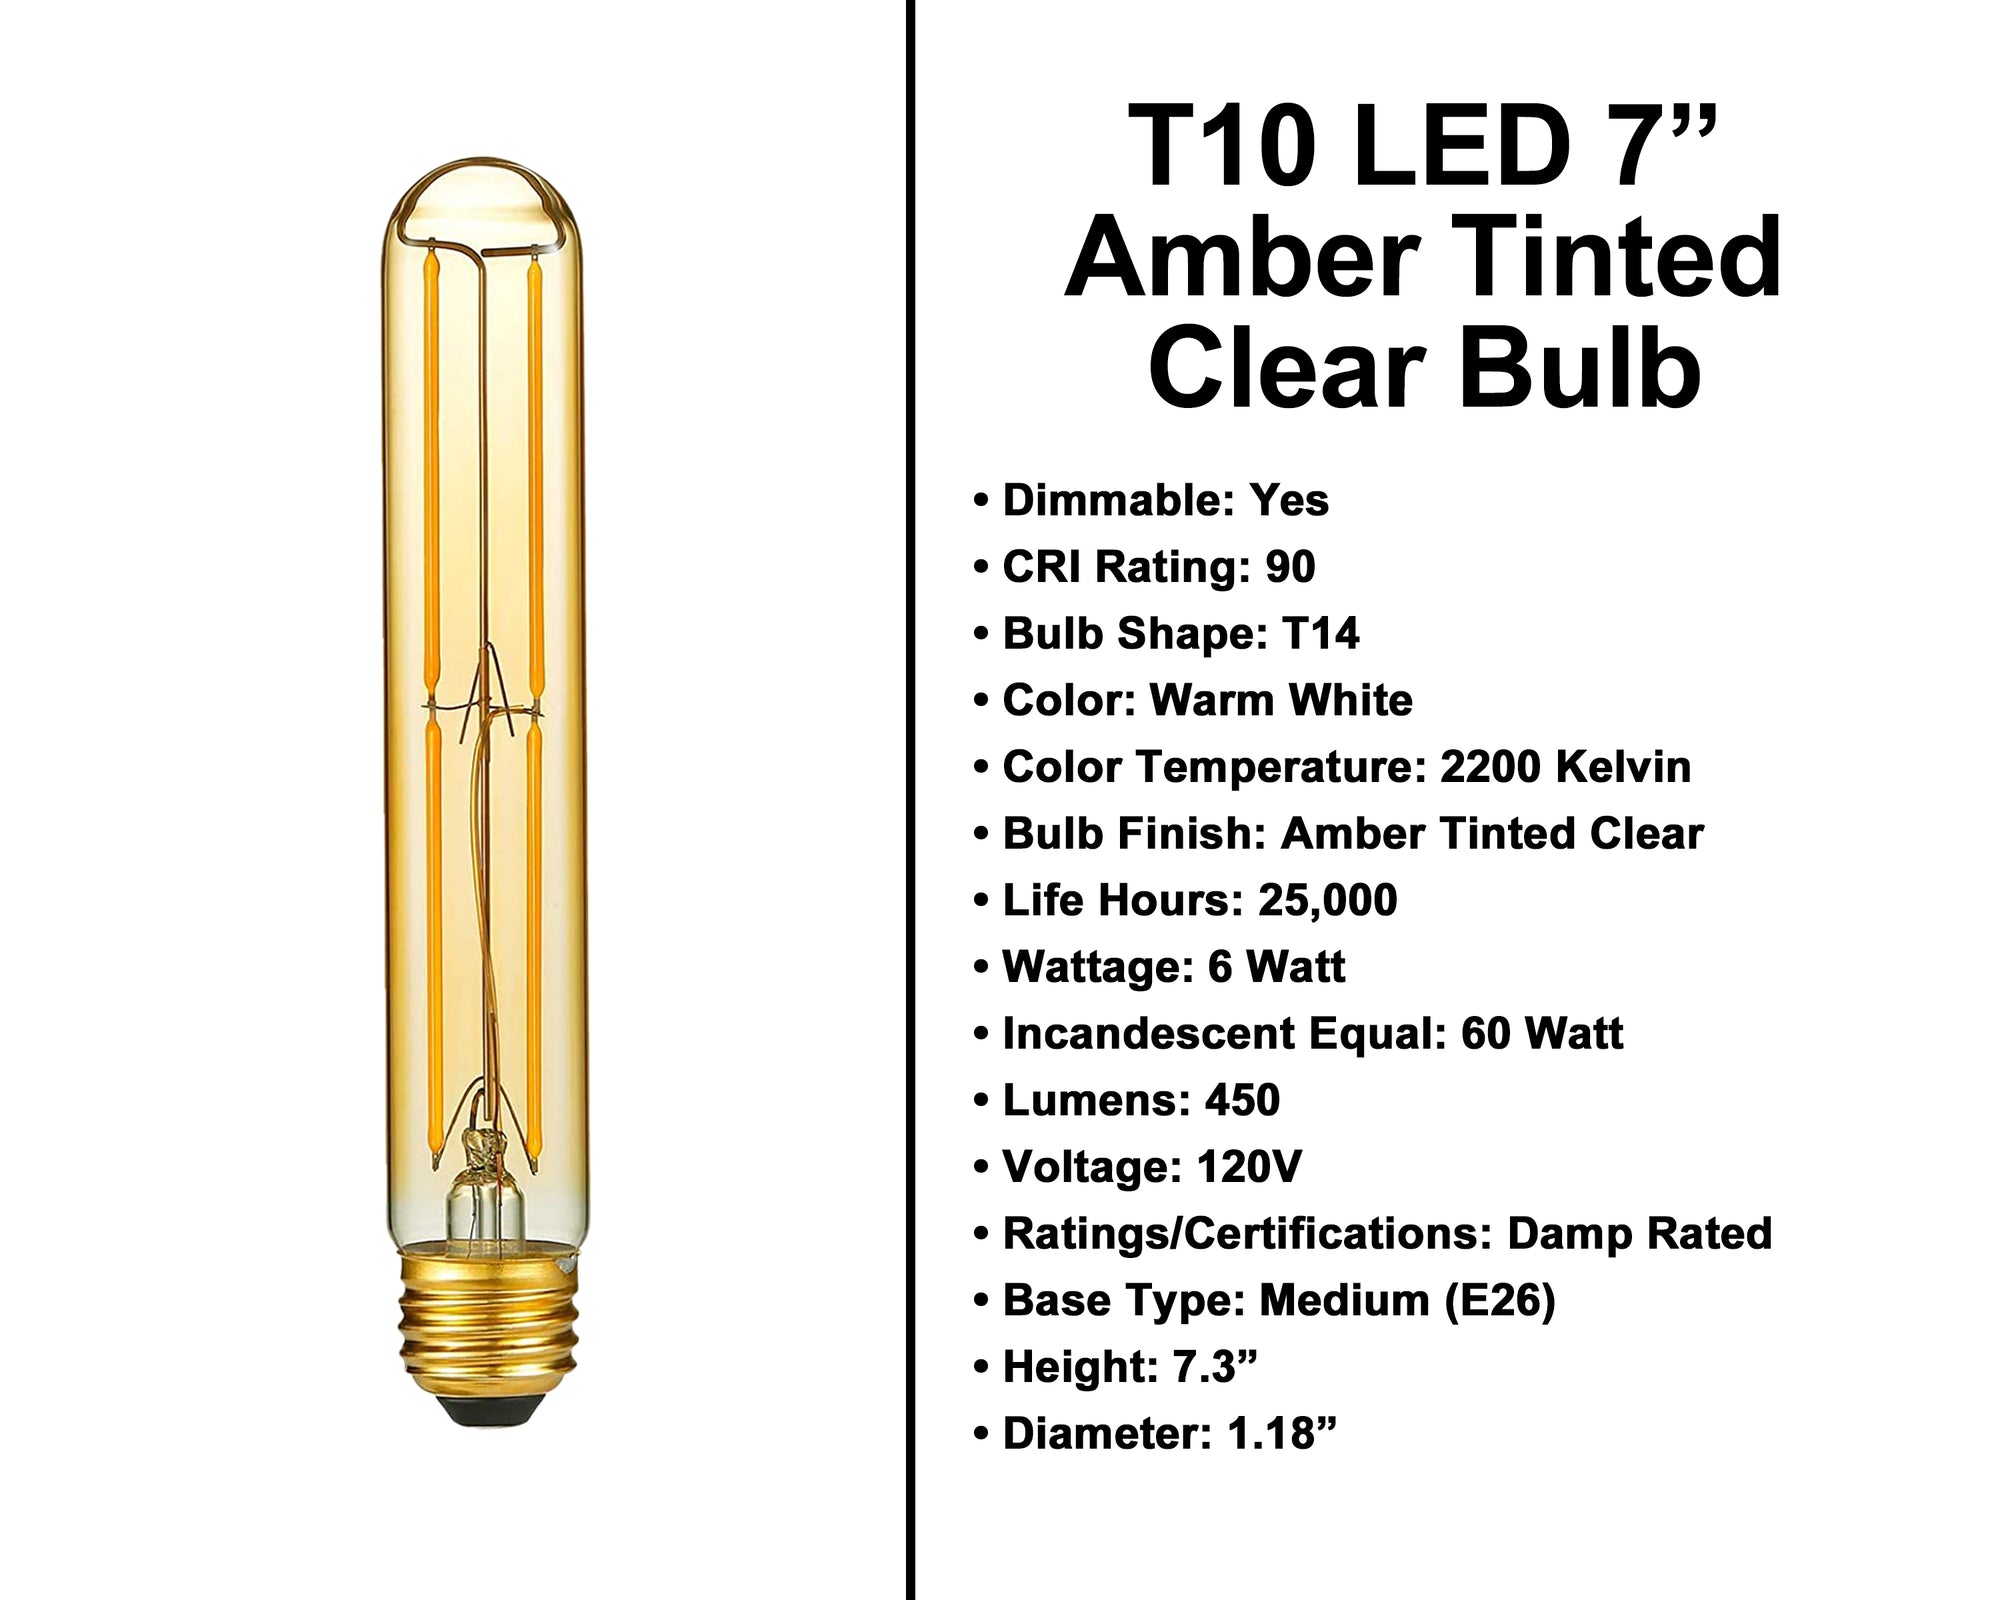 7 Led T10 Amber Tinted Clear Bulb